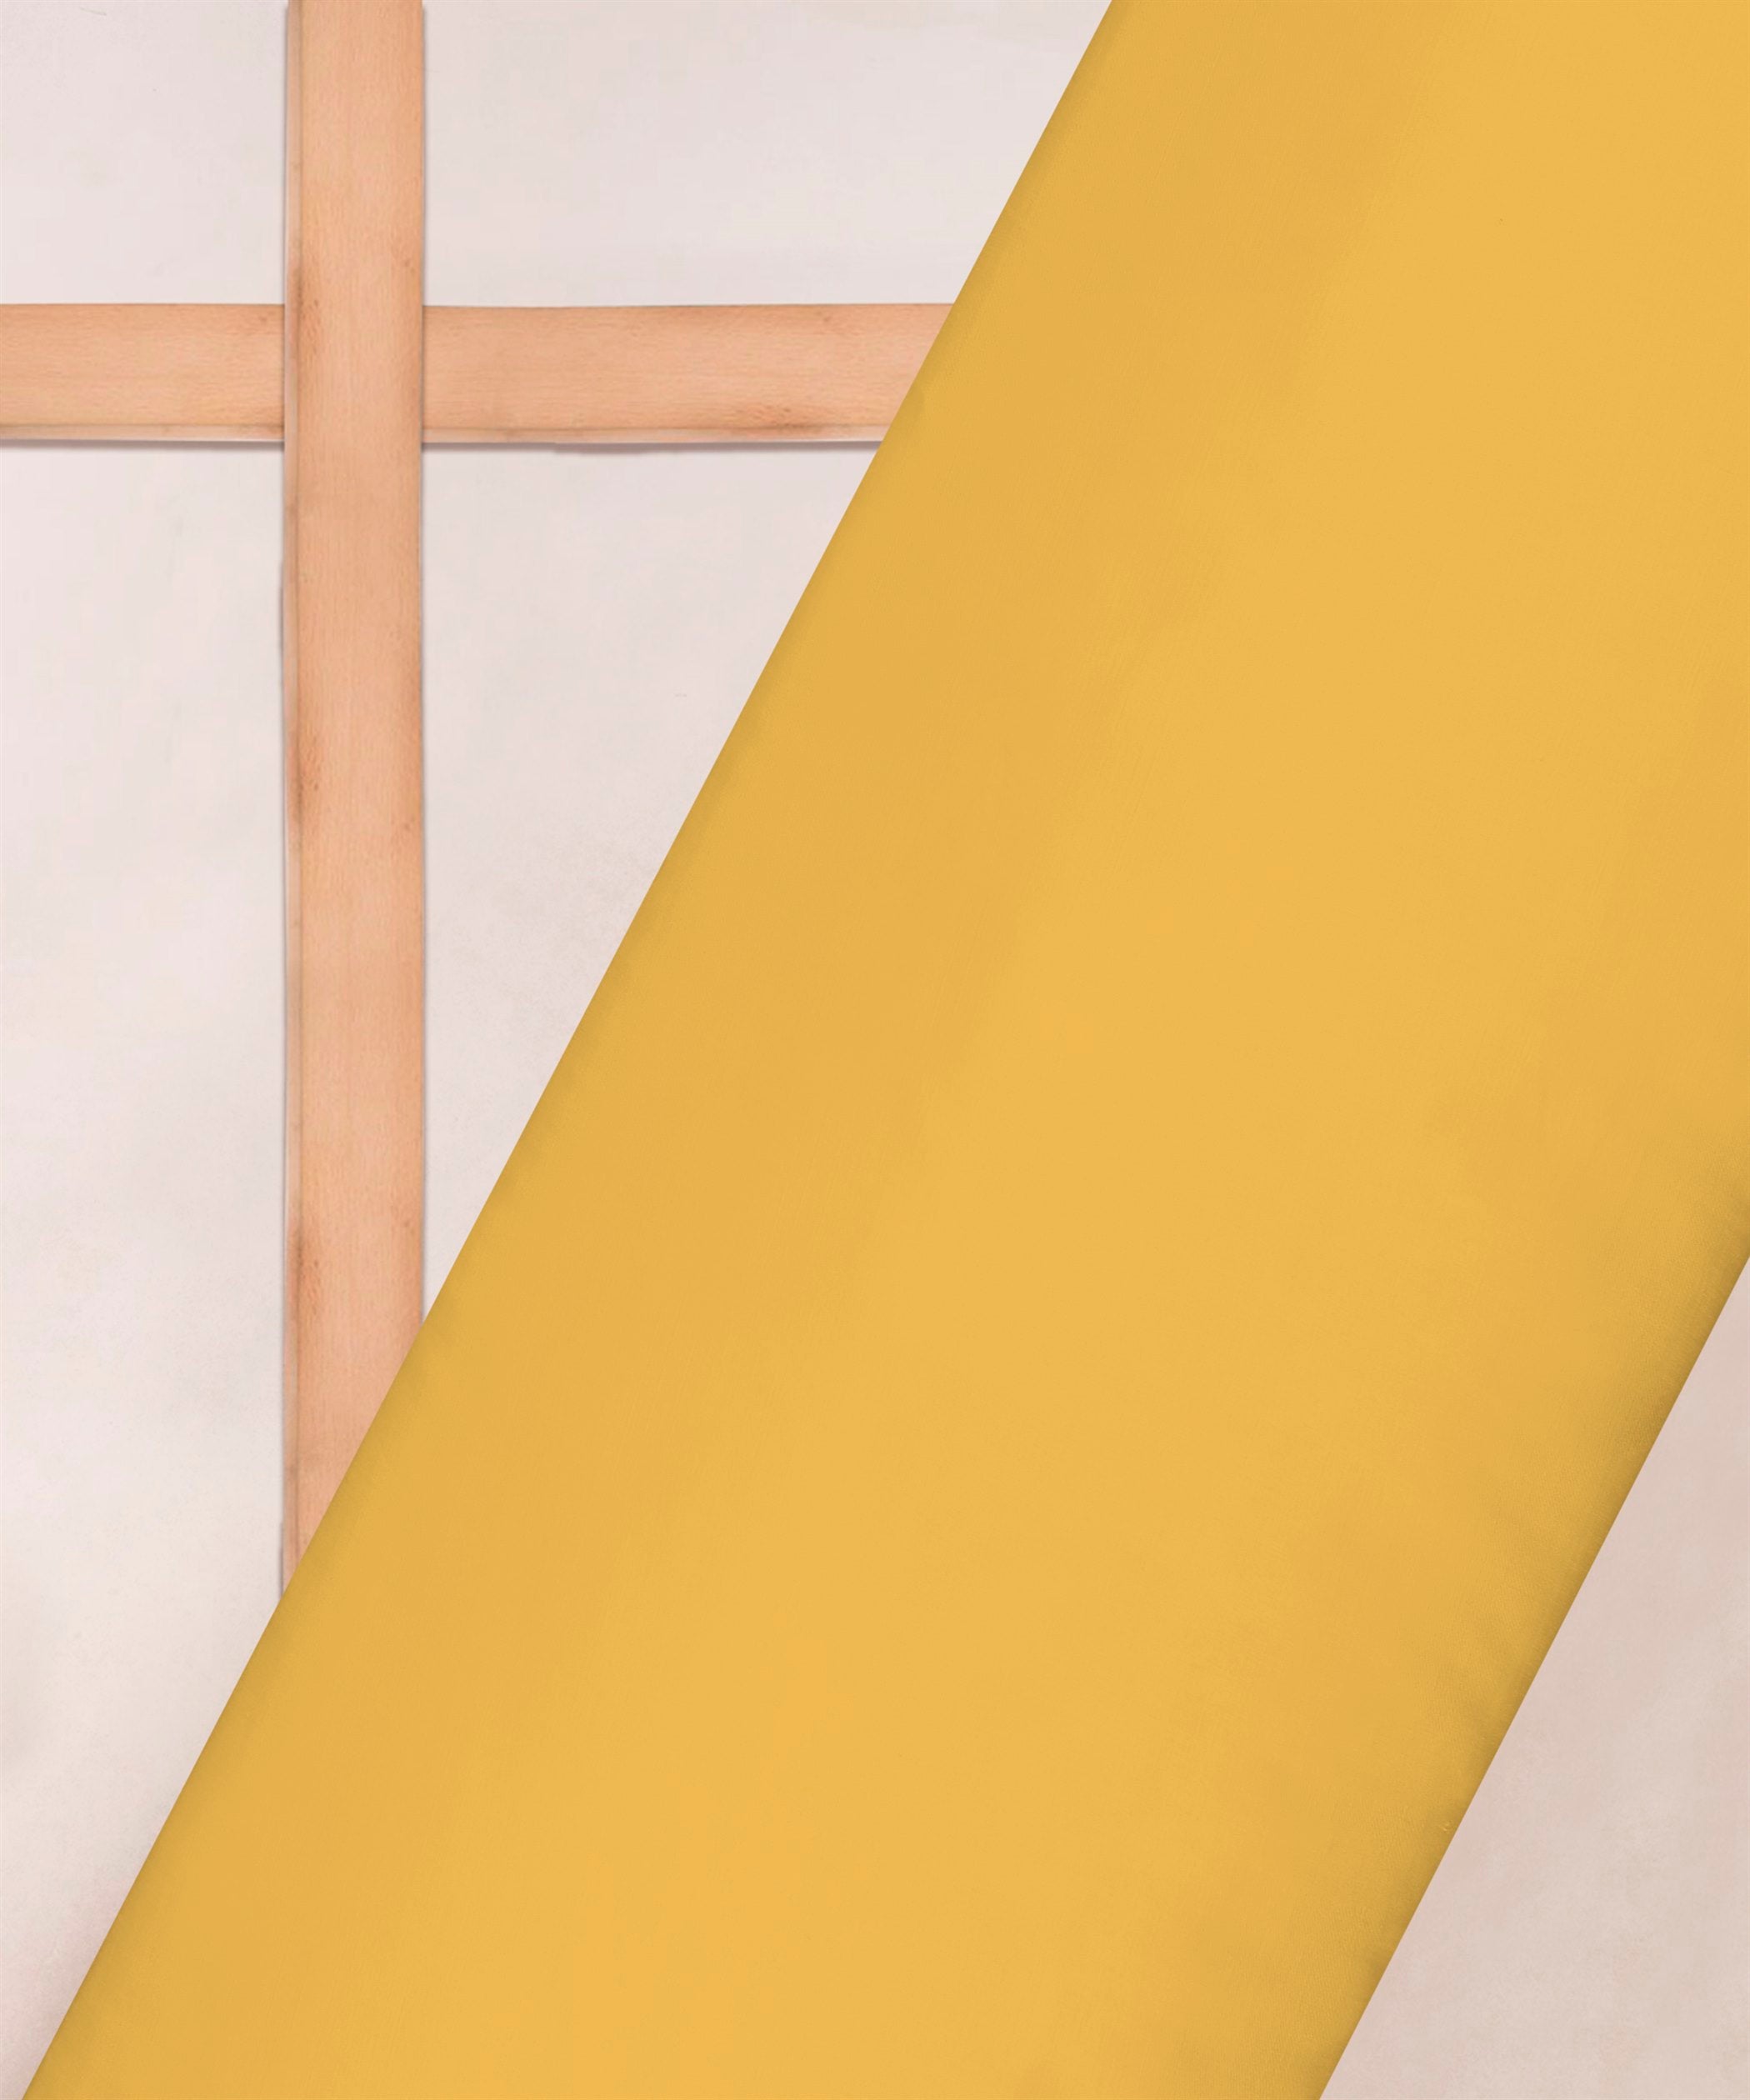 Mustard Yellow Plain Dyed Modal Satin Fabric